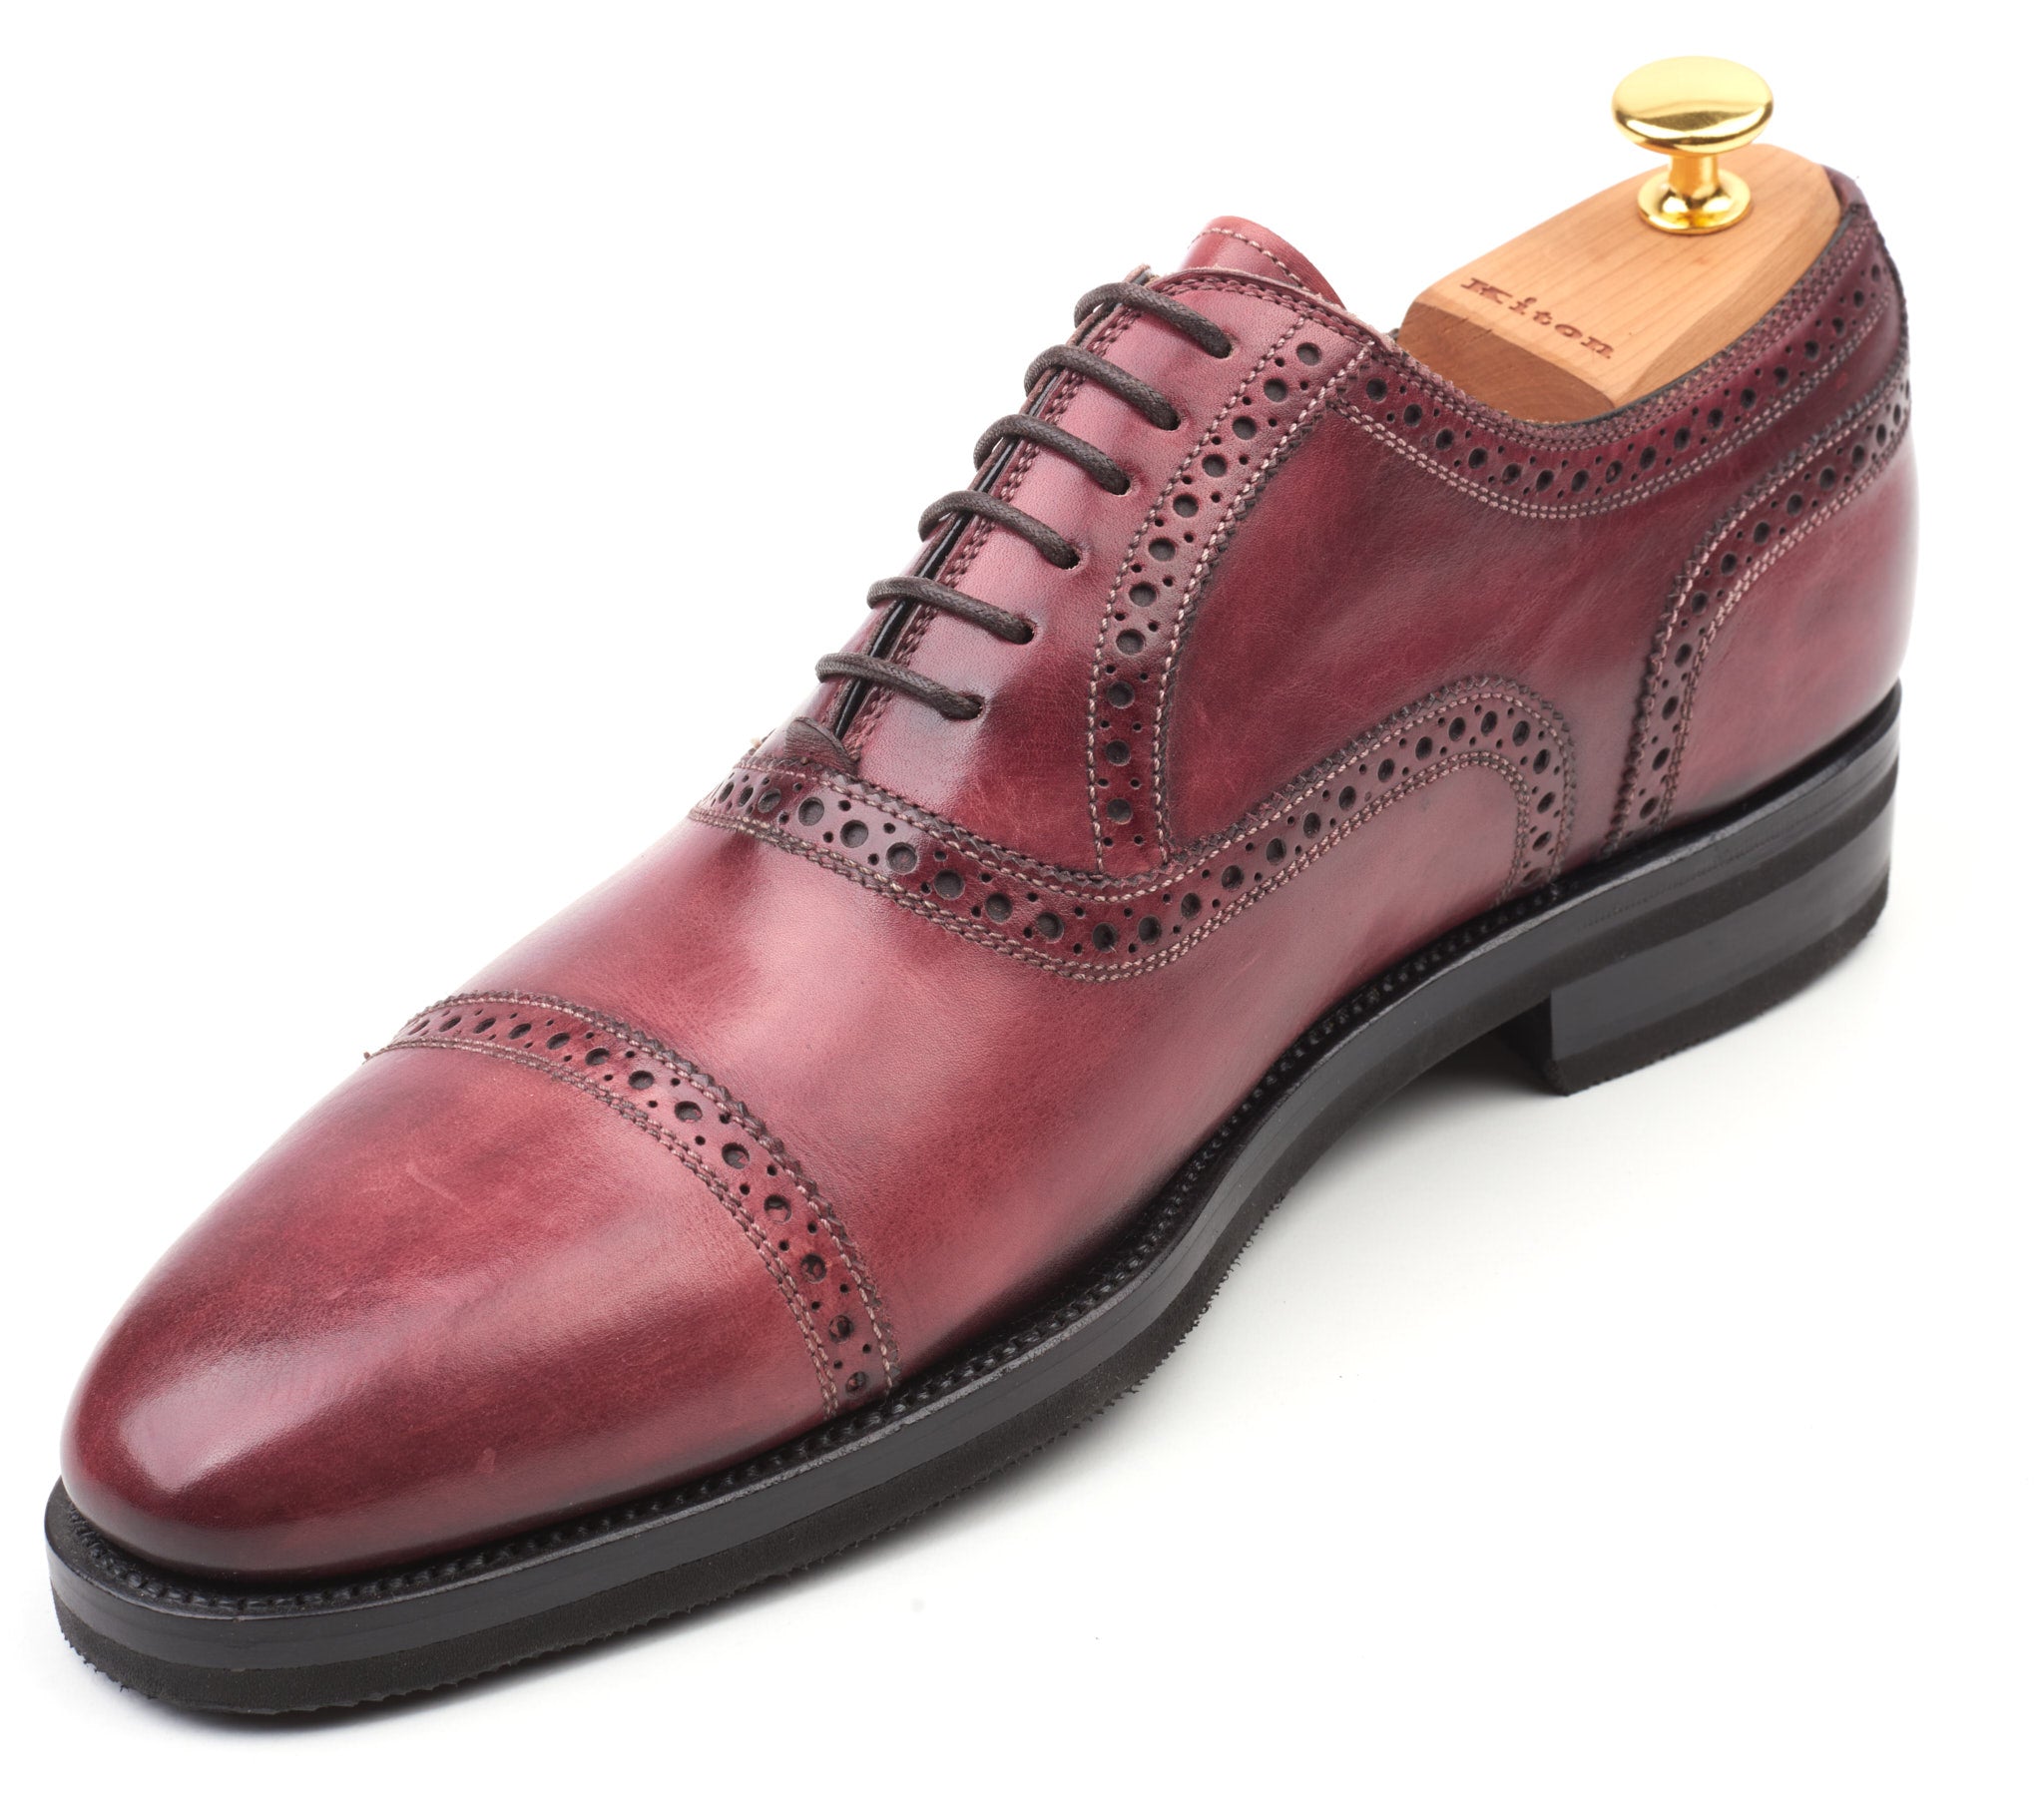 KITON Handmade Bordeaux Calfskin Leather Oxford Shoes US 10 NEW with Box KITON